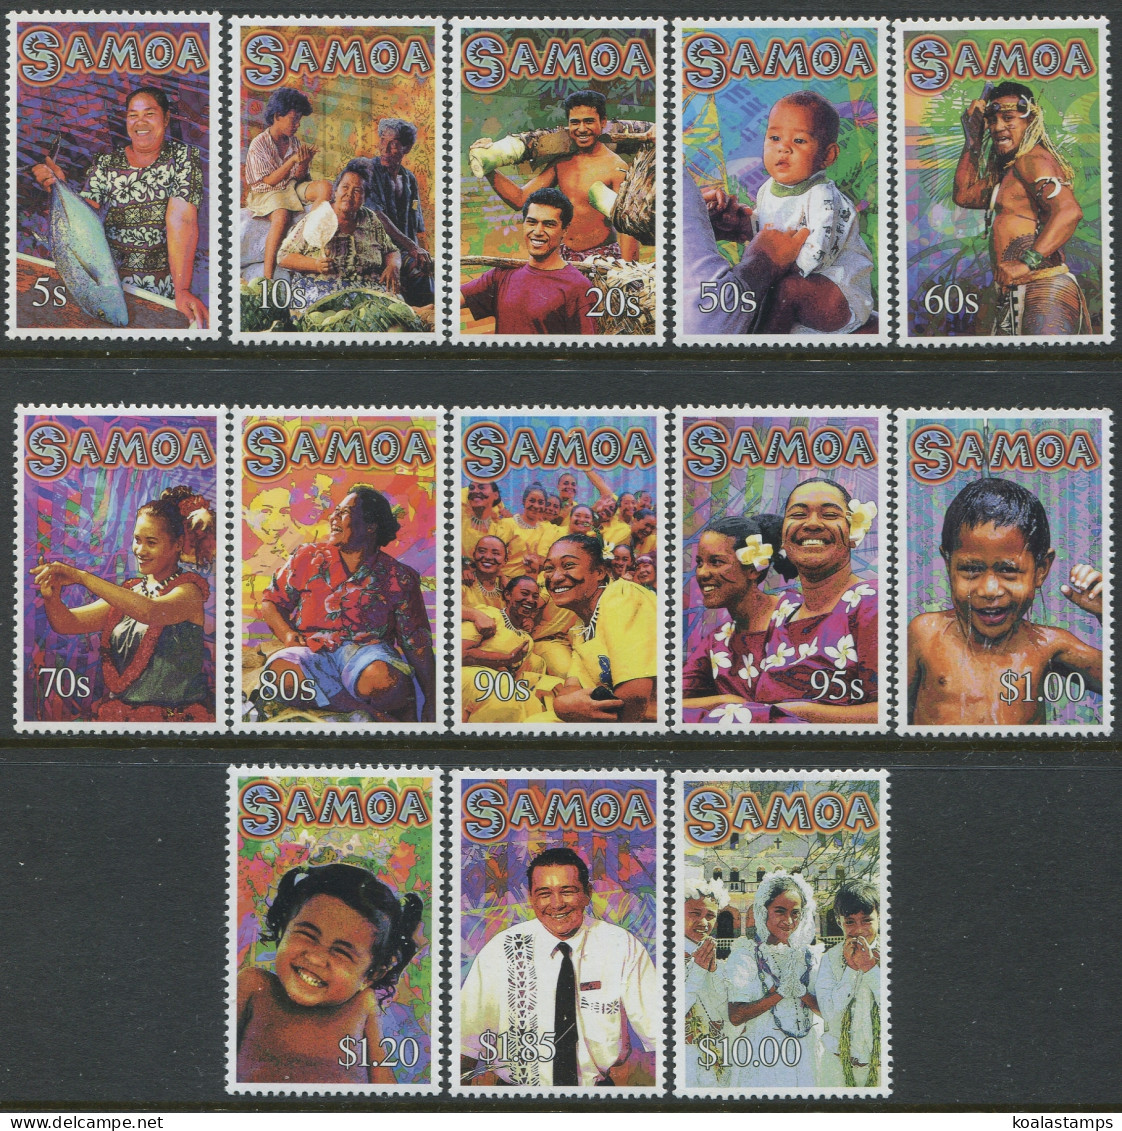 Samoa 2002 SG1089-1103 Faces (13) MNH - Samoa (Staat)